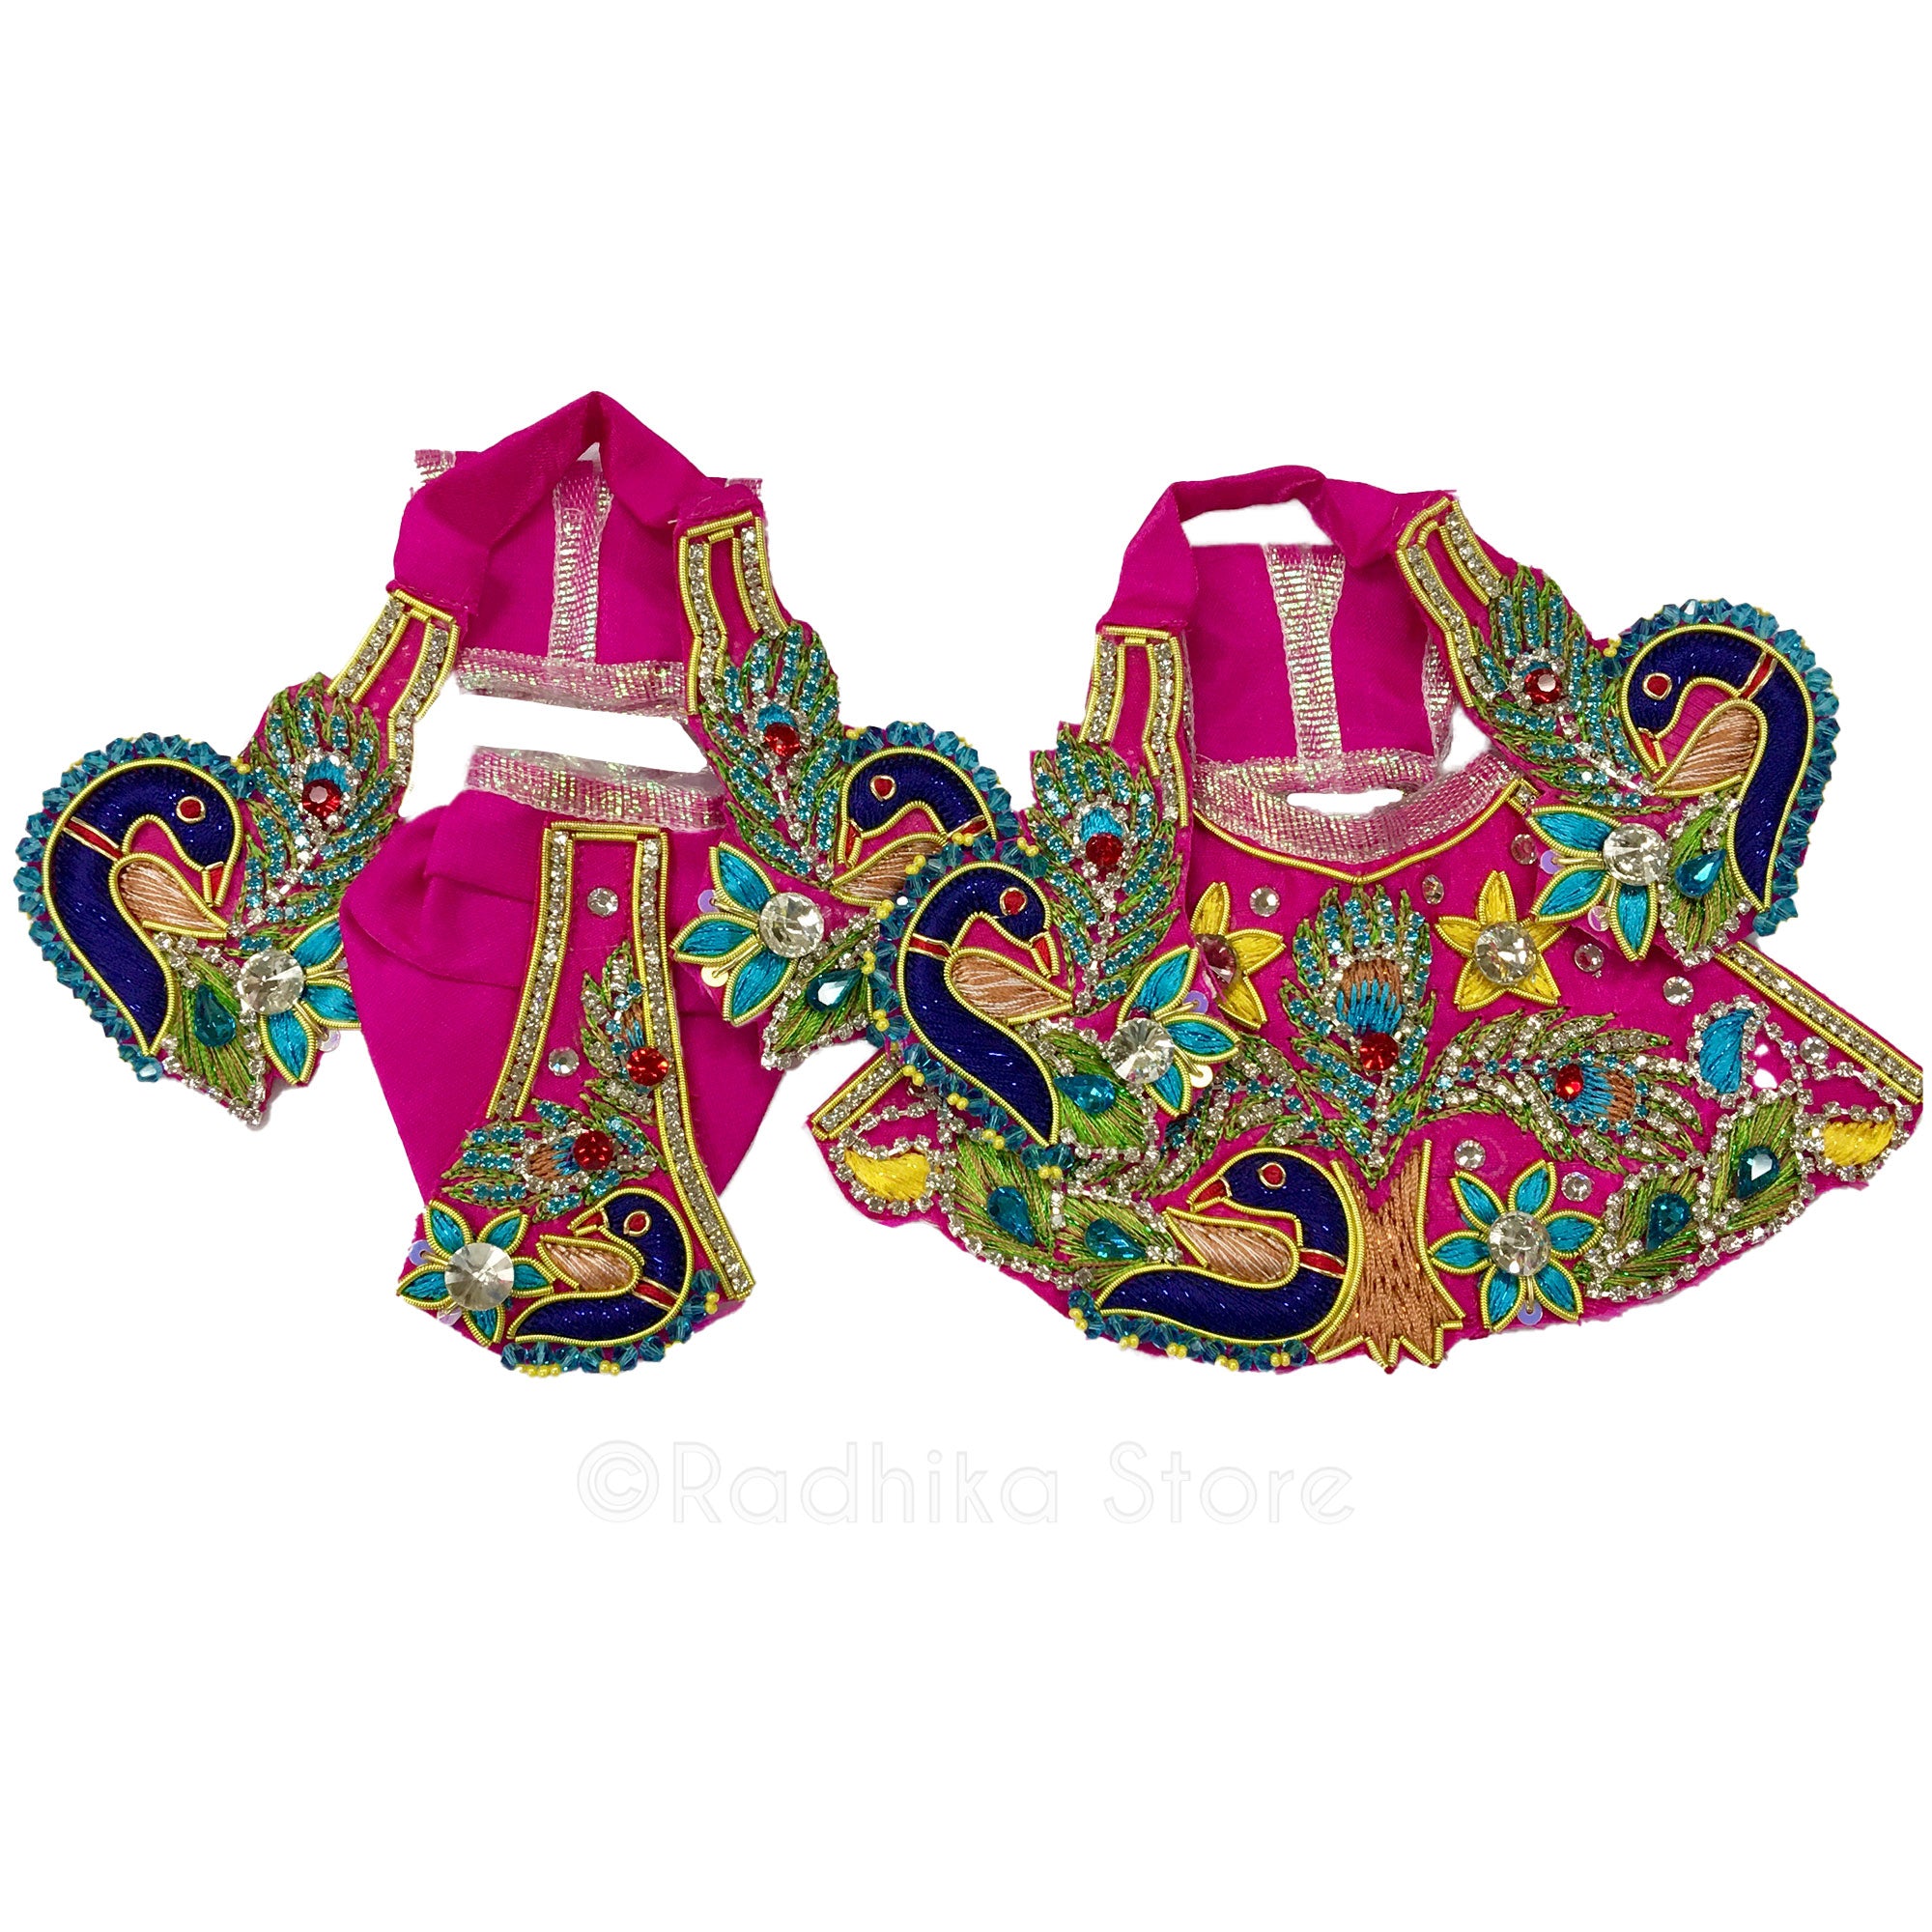 Vamsi Vat Peacocks - Neon PInk Satin - Radha Krishna Deity Outfit